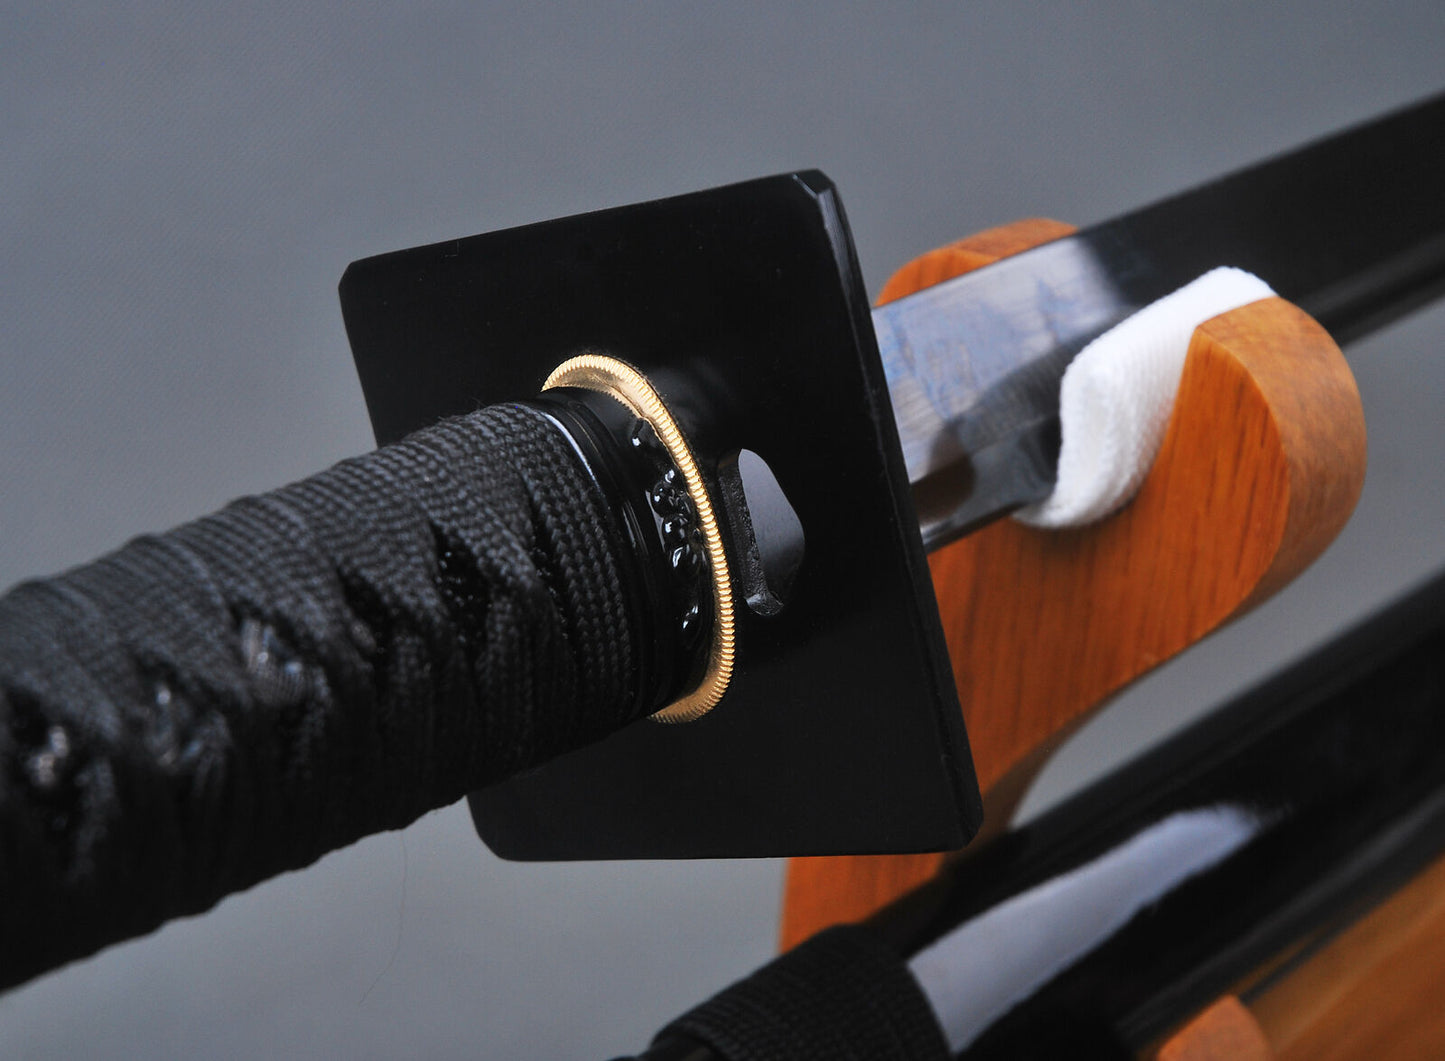 Ninja Sword, Black Carbon Steel Blade